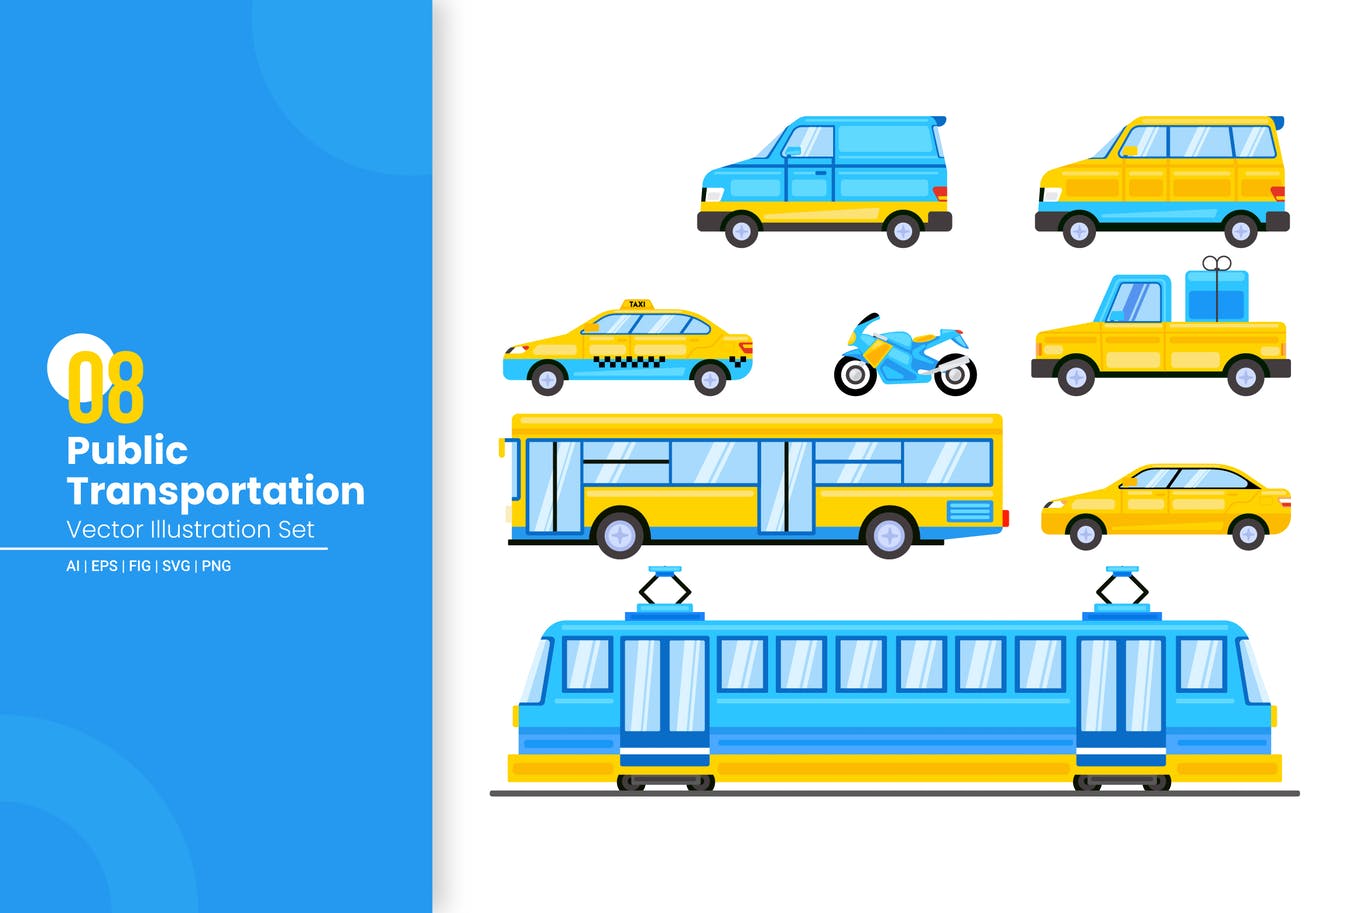 公共交通工具矢量插画集 Public Transportation Vector Illustration Set 图片素材 第1张